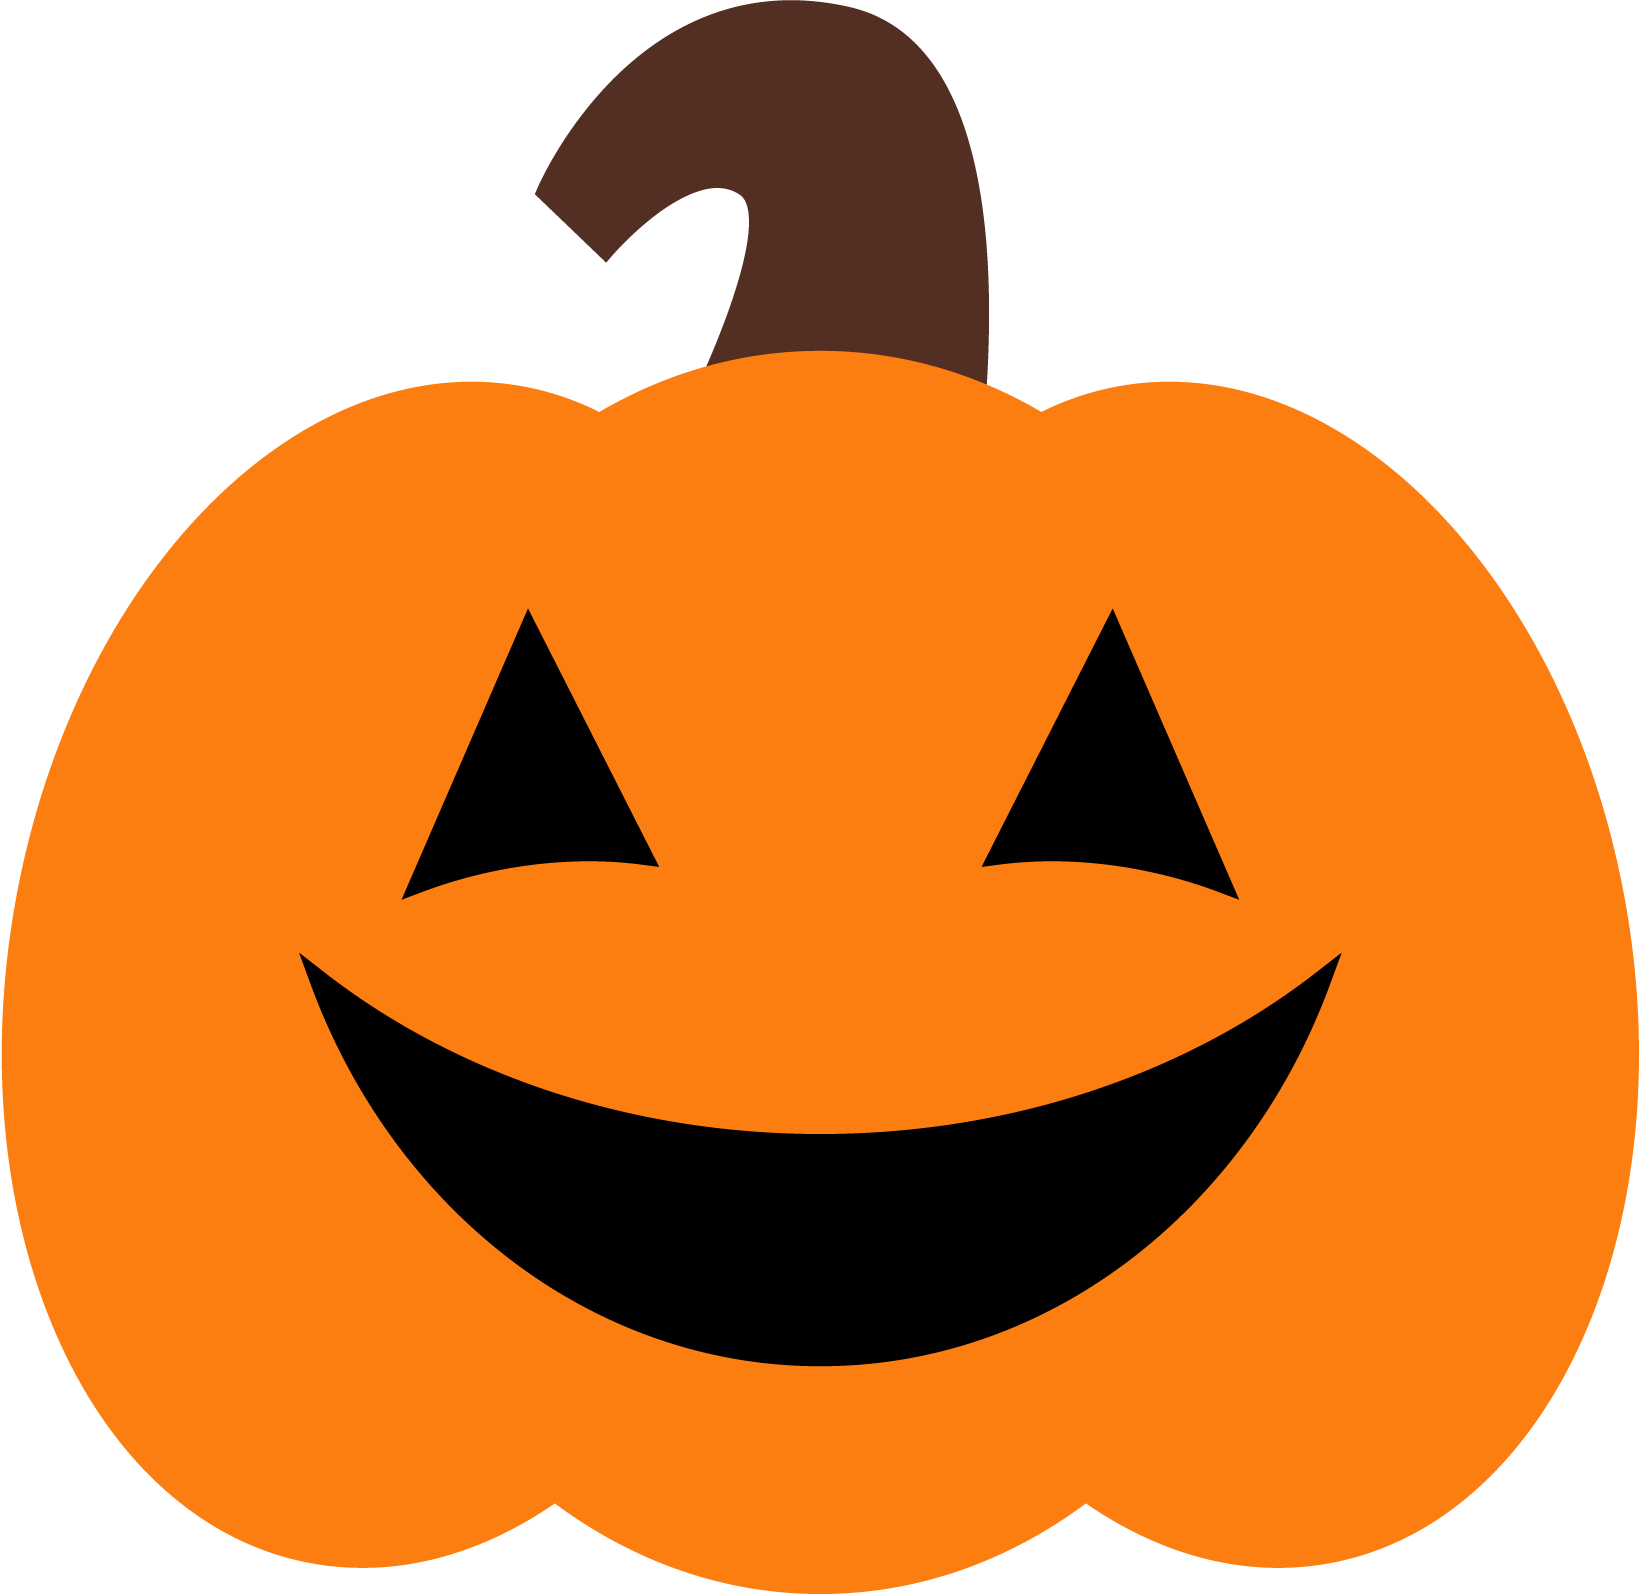 Halloween pumpkin clipart vector